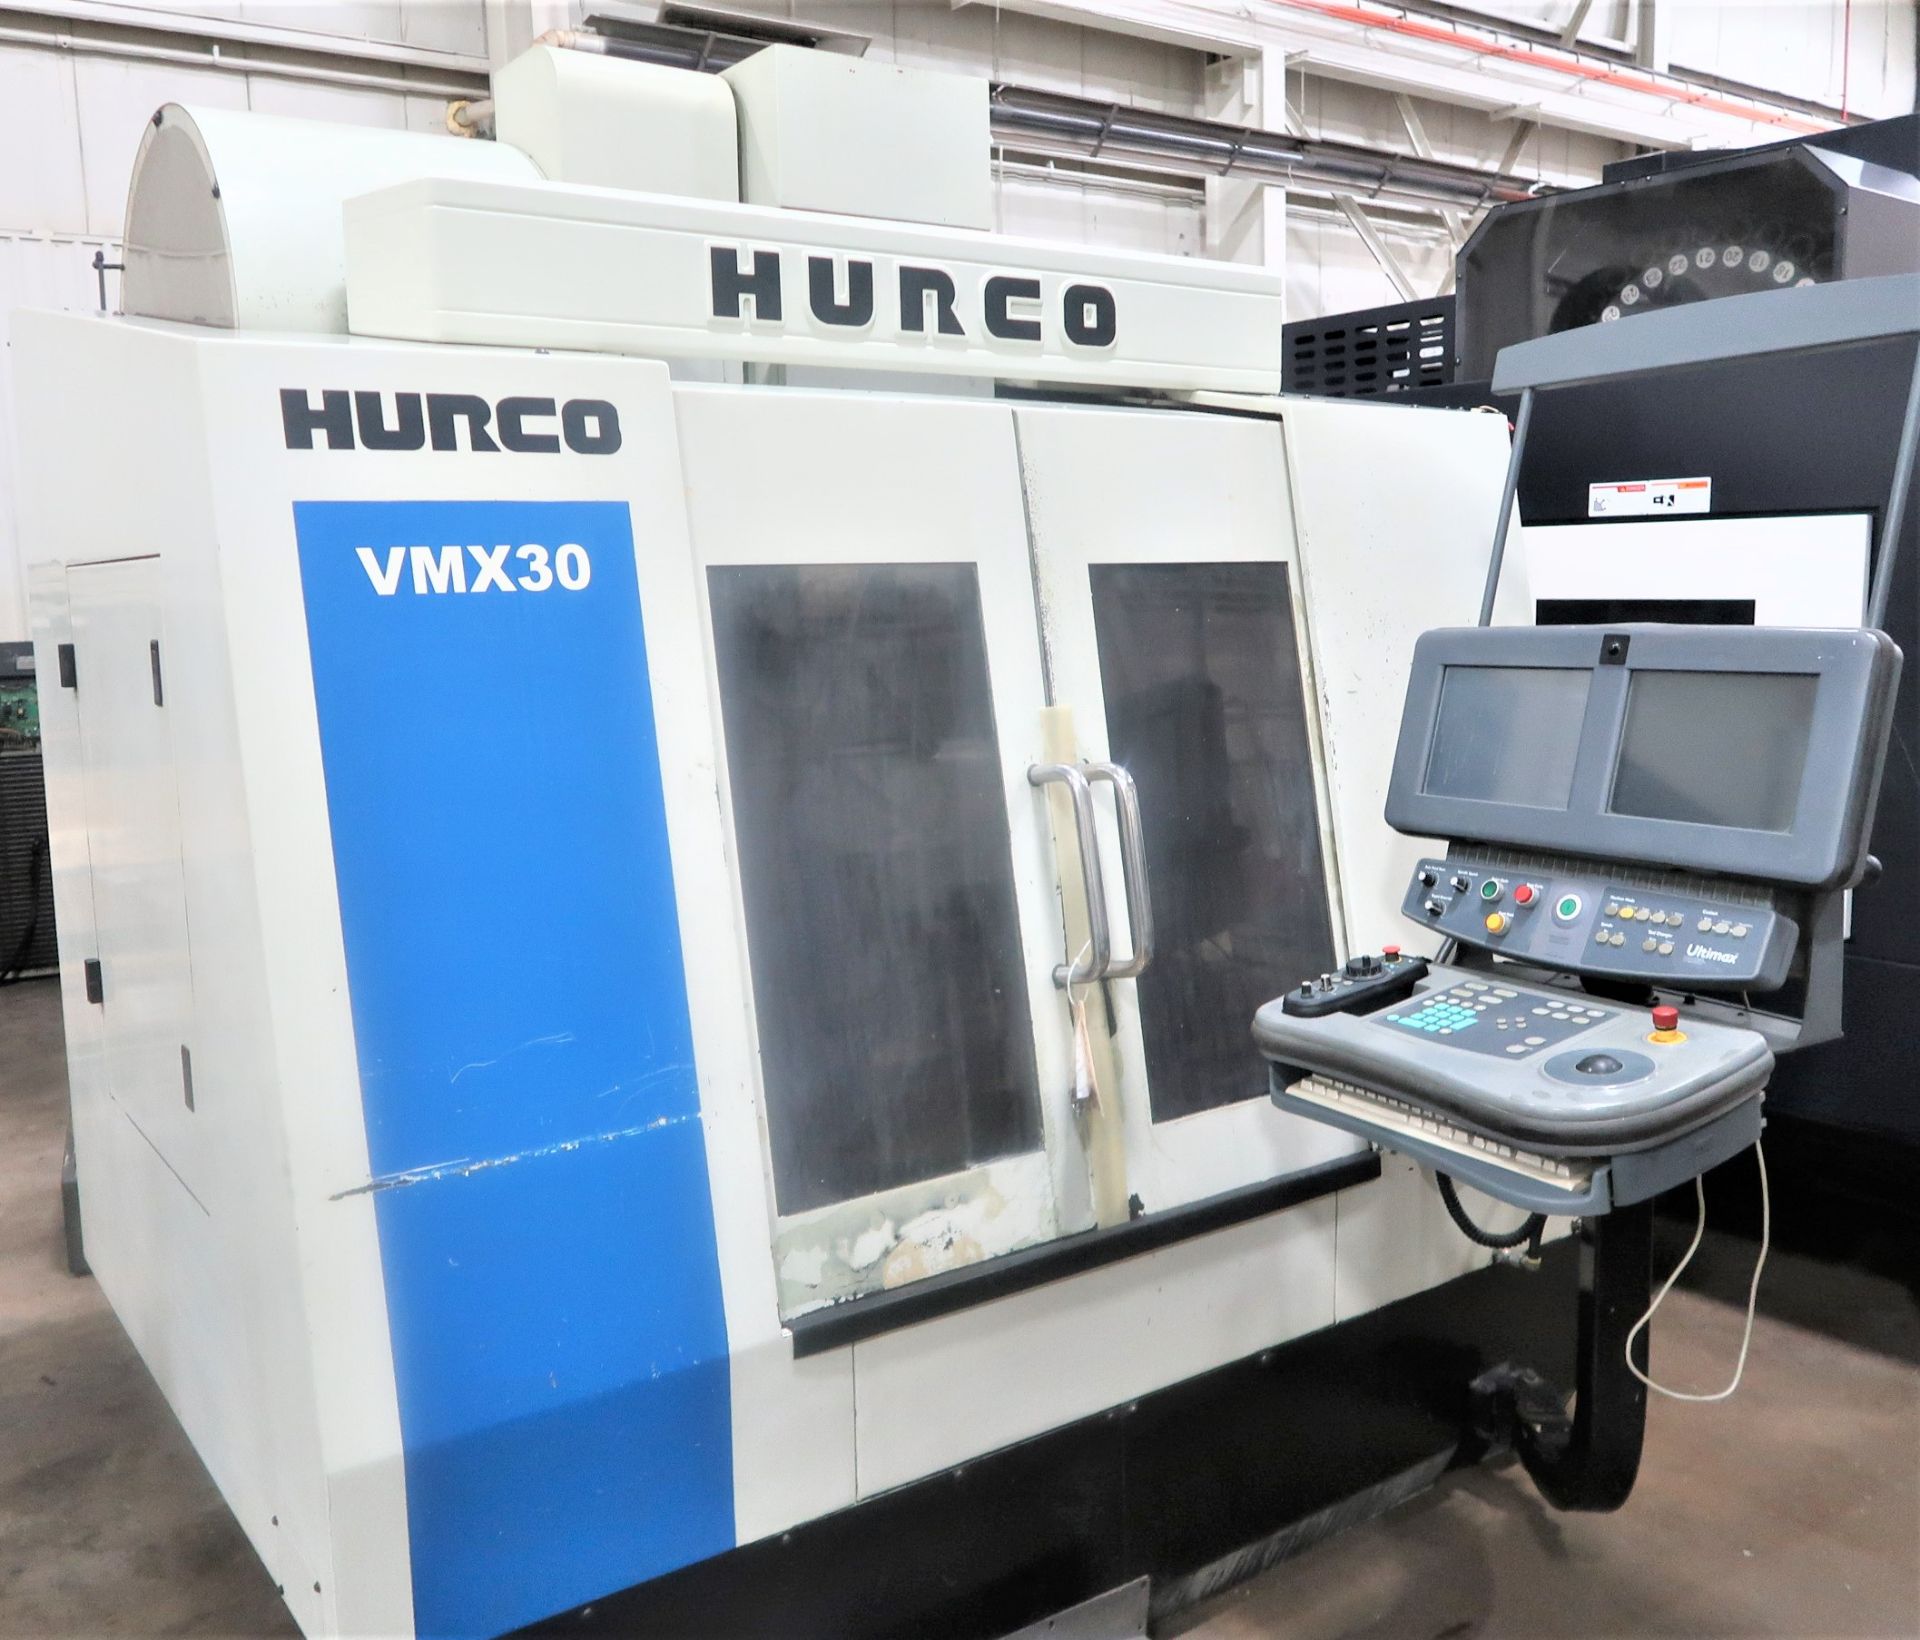 Hurco VMX-30 4-Axis CNC Vertical Machining Center, New 2005